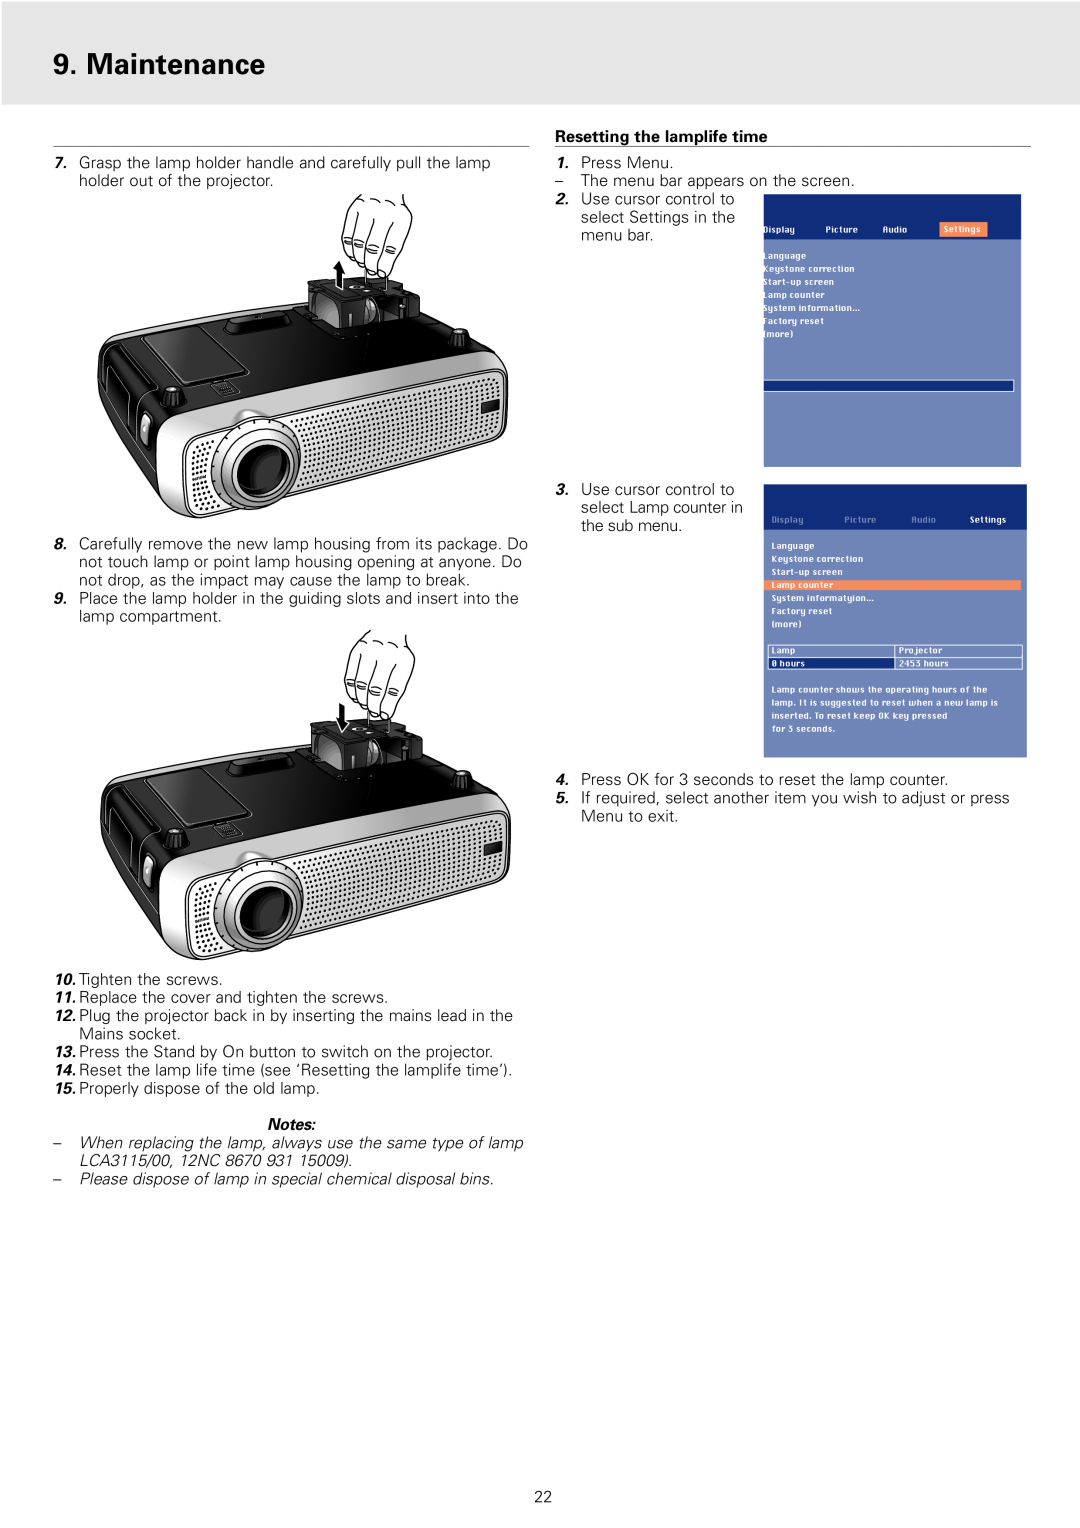 Philips cSmart Series manual Maintenance, Resetting the lamplife time, Press Menu, holder out of the projector, menu bar 